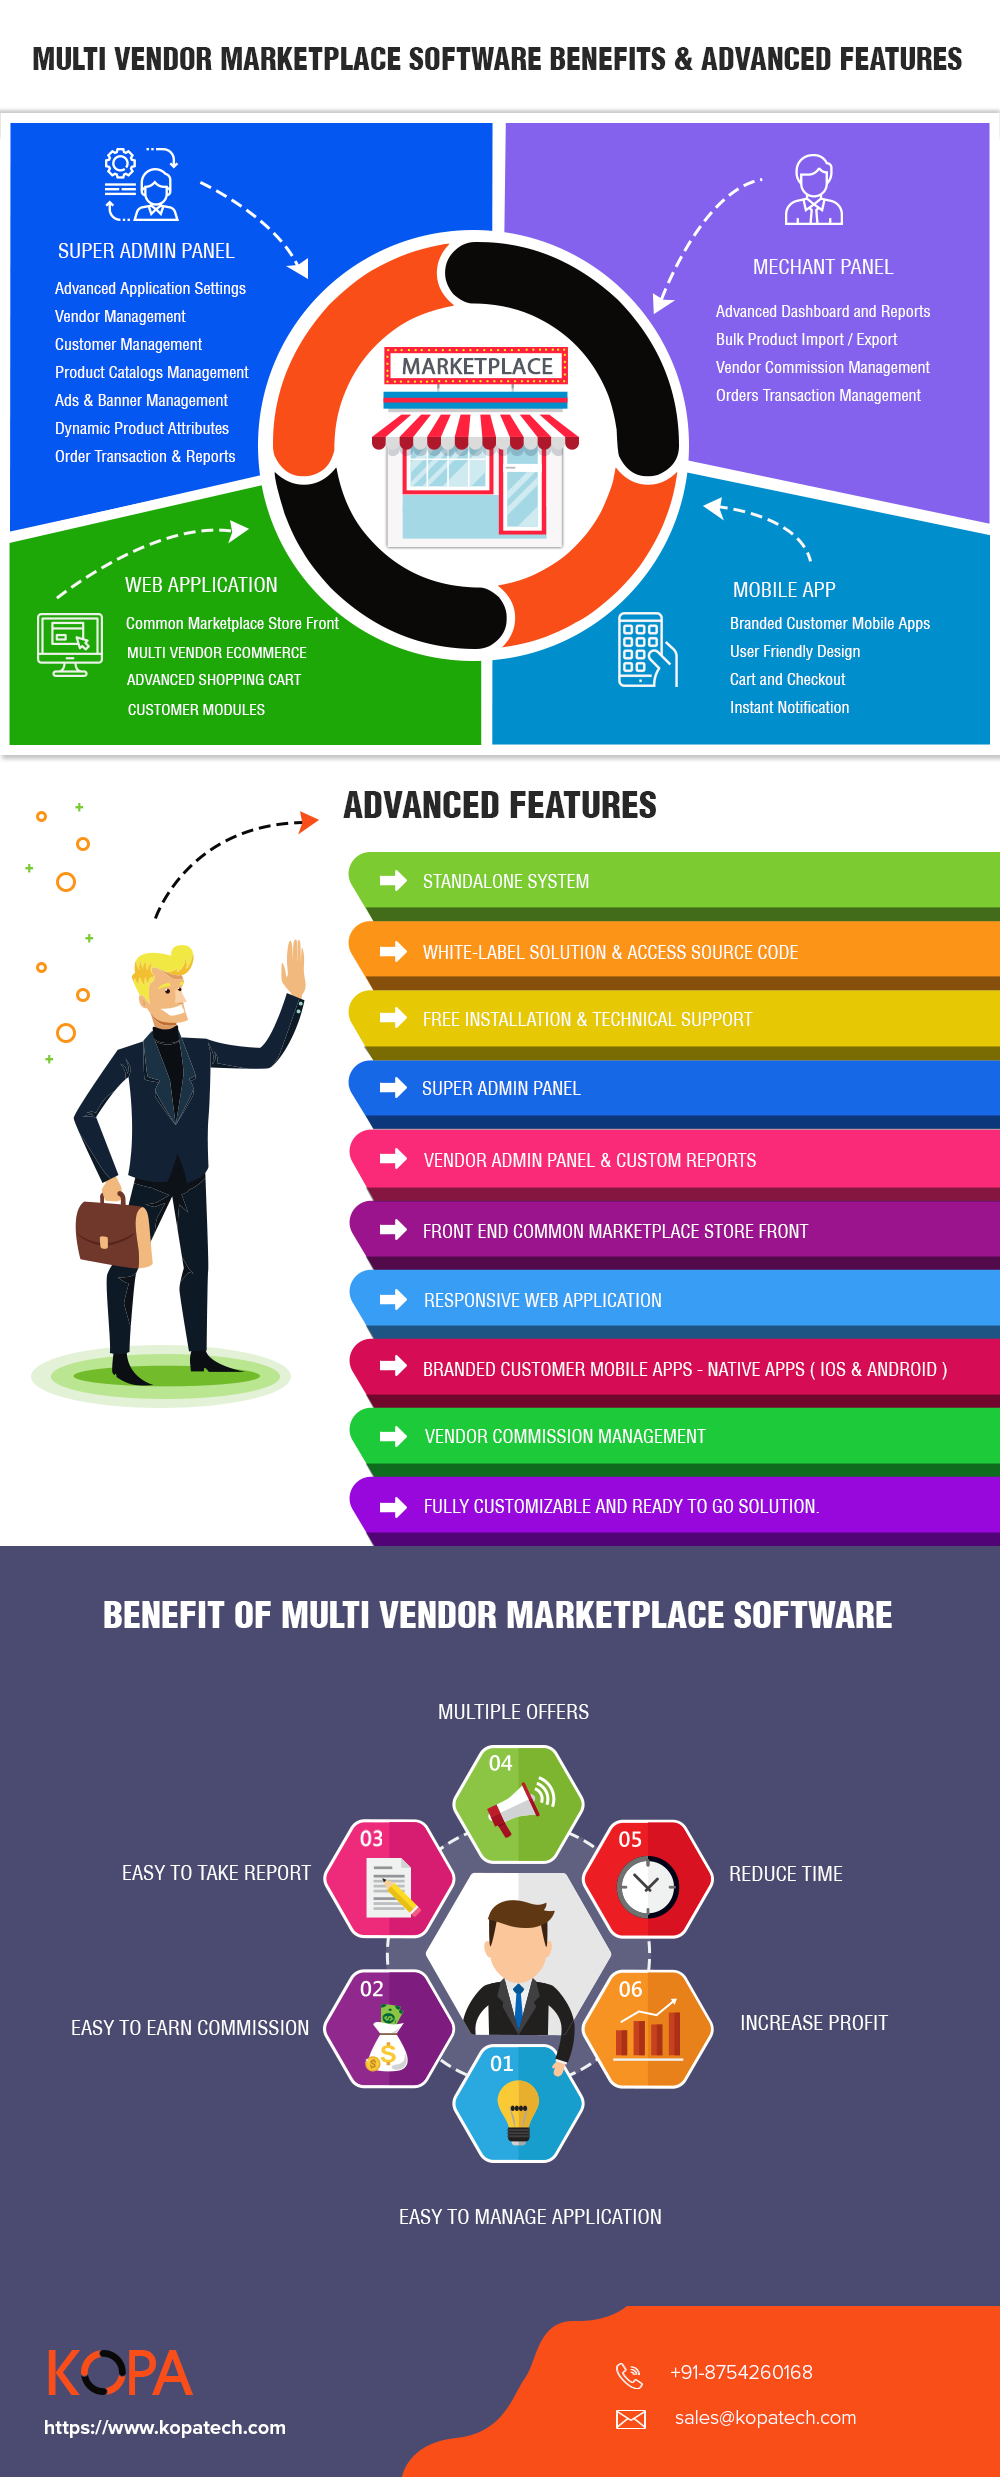 Multi Vendor Marketplace Software - Benefits & Features